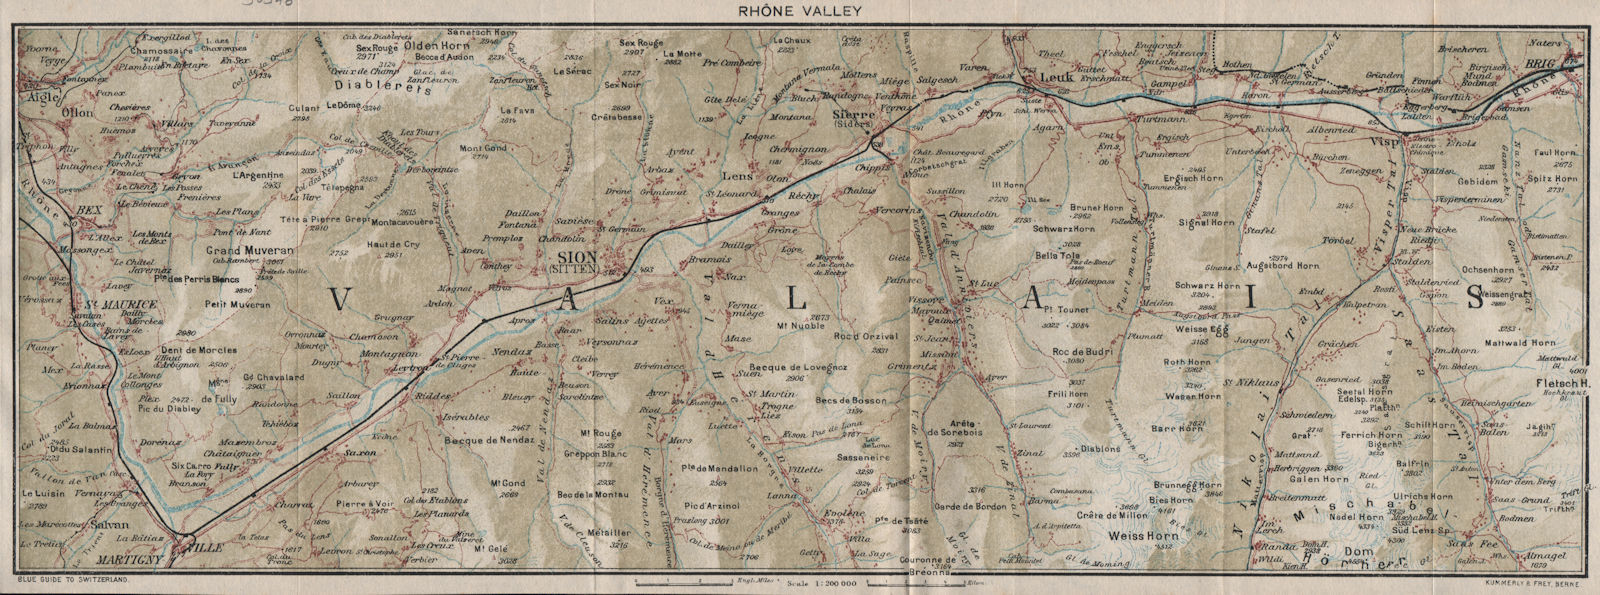 VALAIS RHÔNE VALLEY. Villars Nendaz Sion Crans-Montana. Switzerland 1930 map